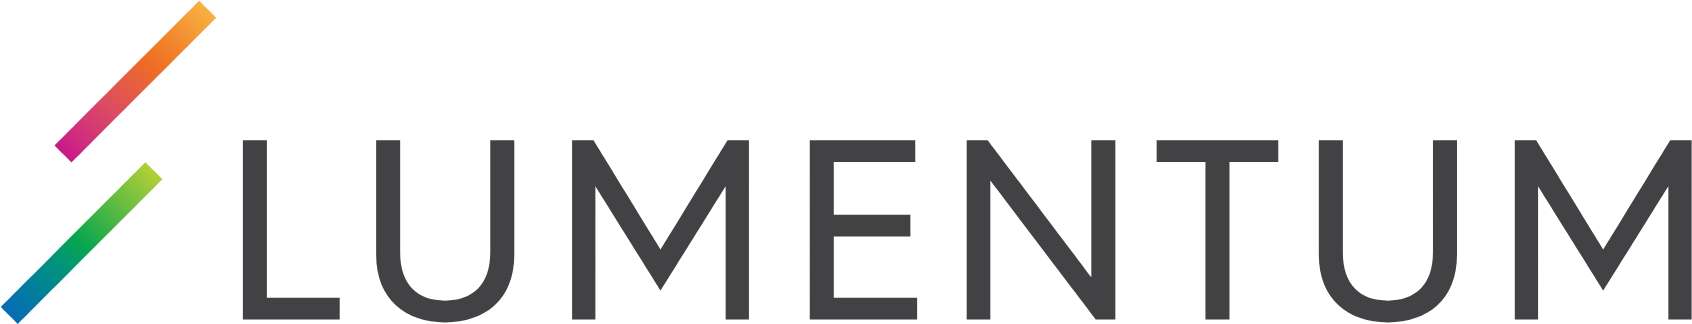 Lumentum logo large (transparent PNG)